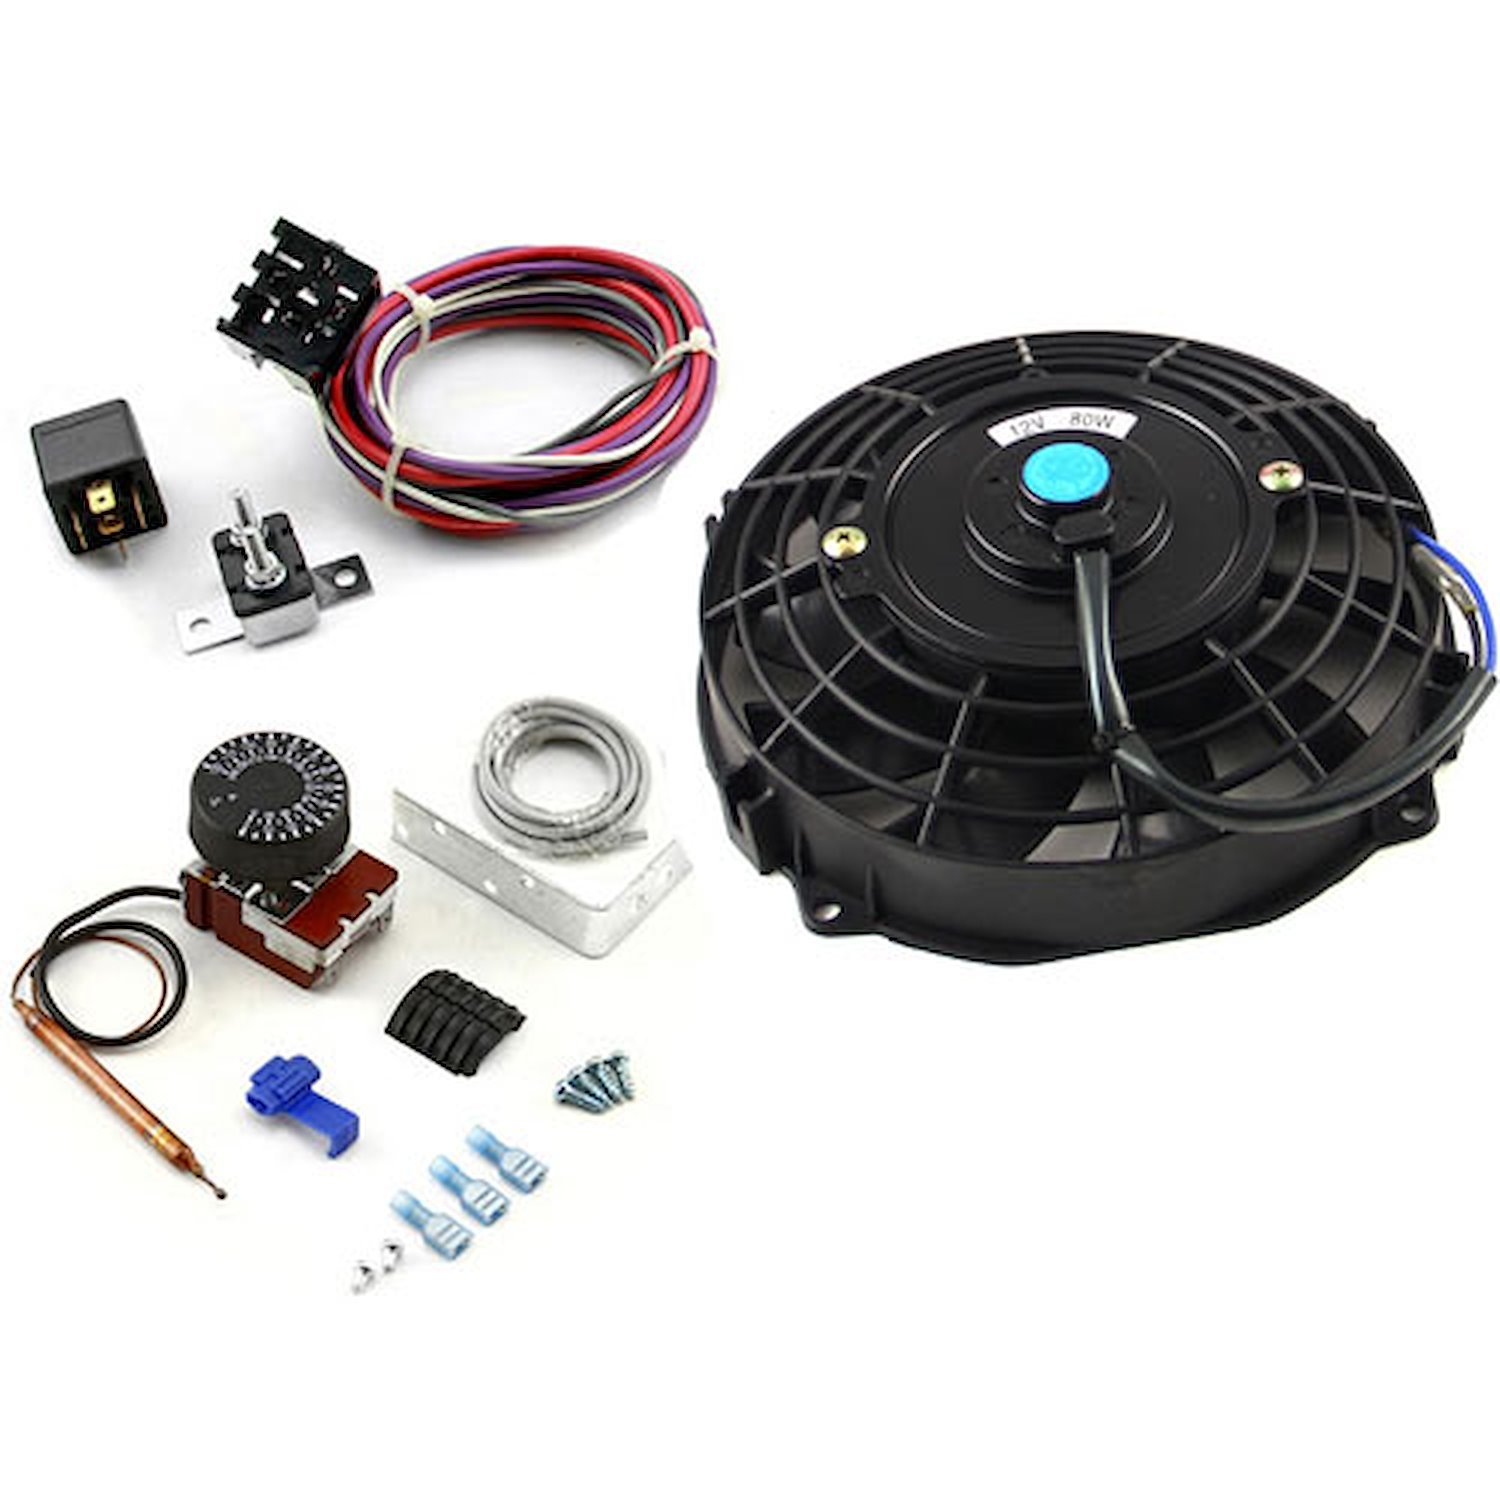 Electric Fan Kit 550 CFM Includes: